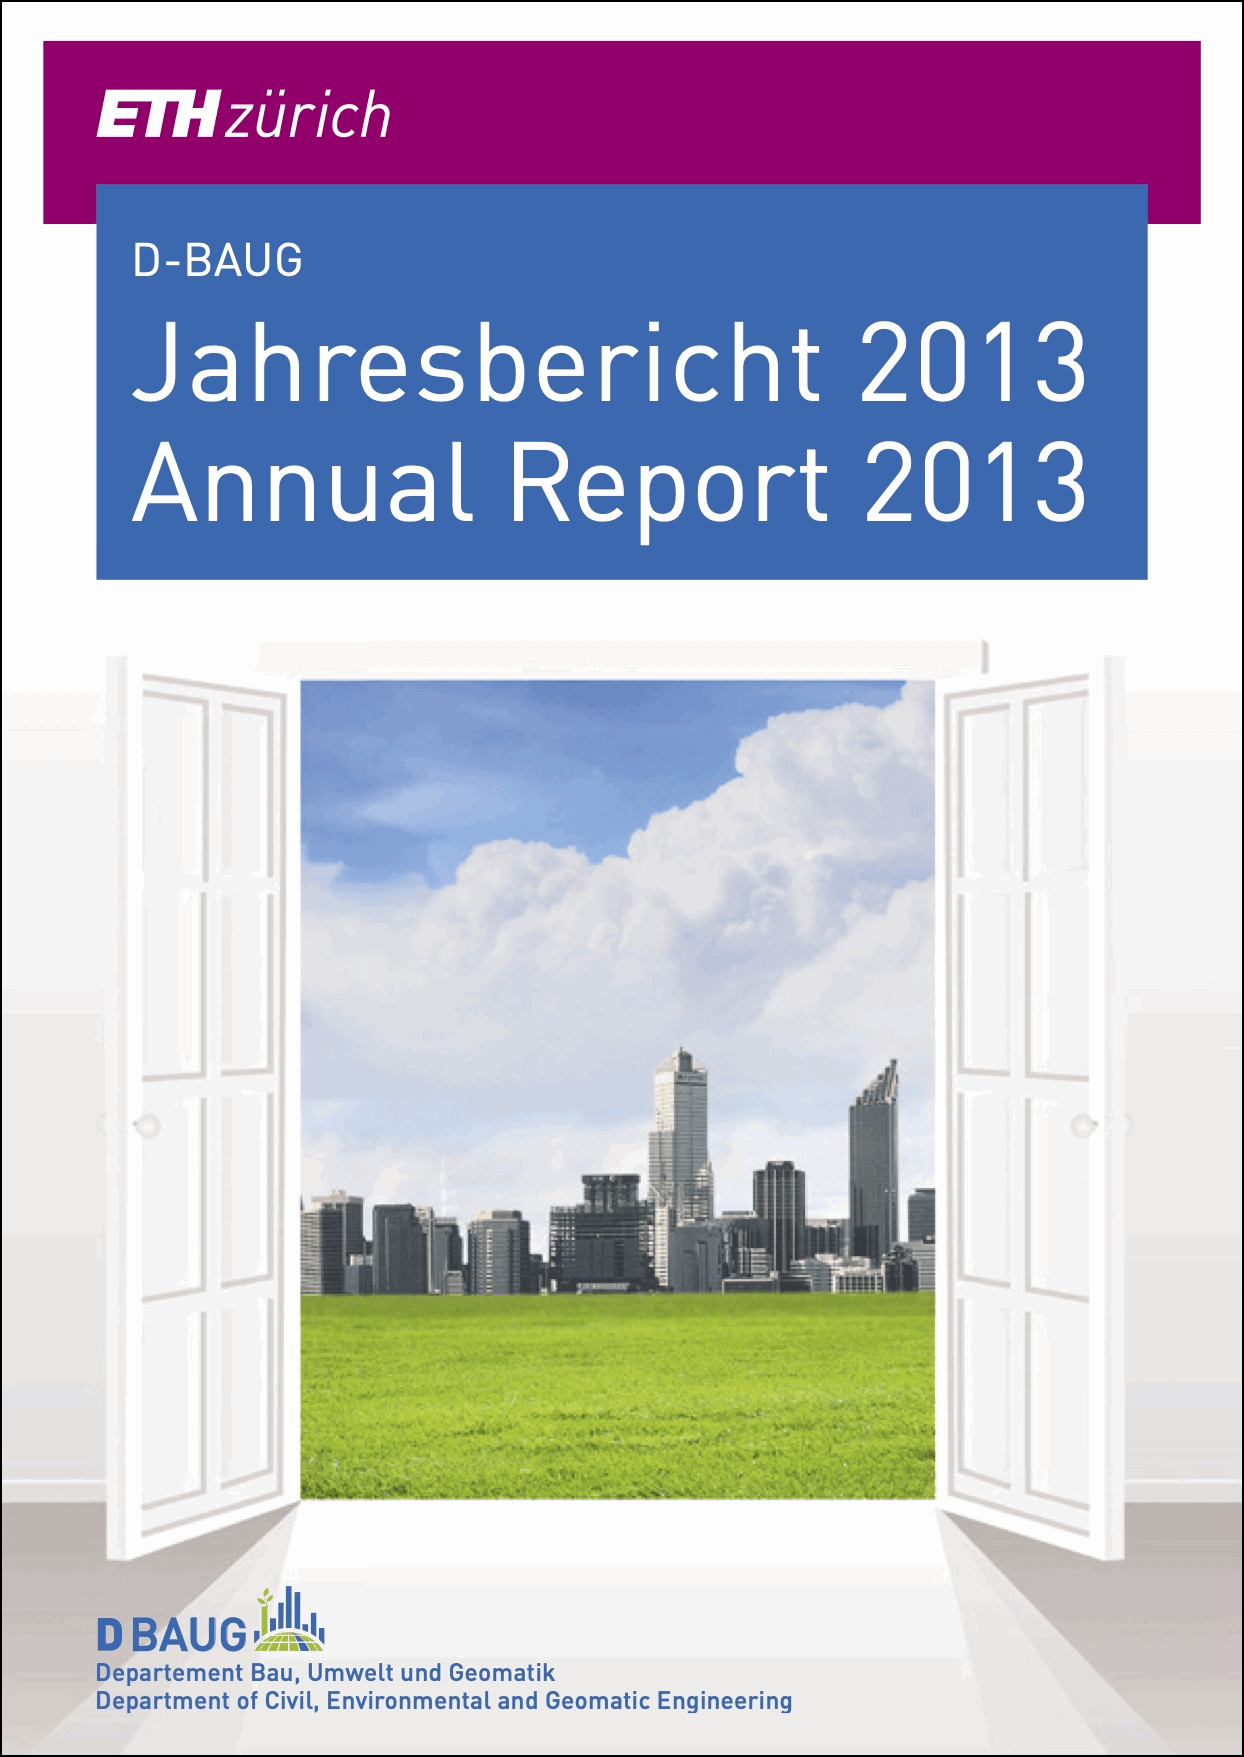 D-BAUG Annual report 2013